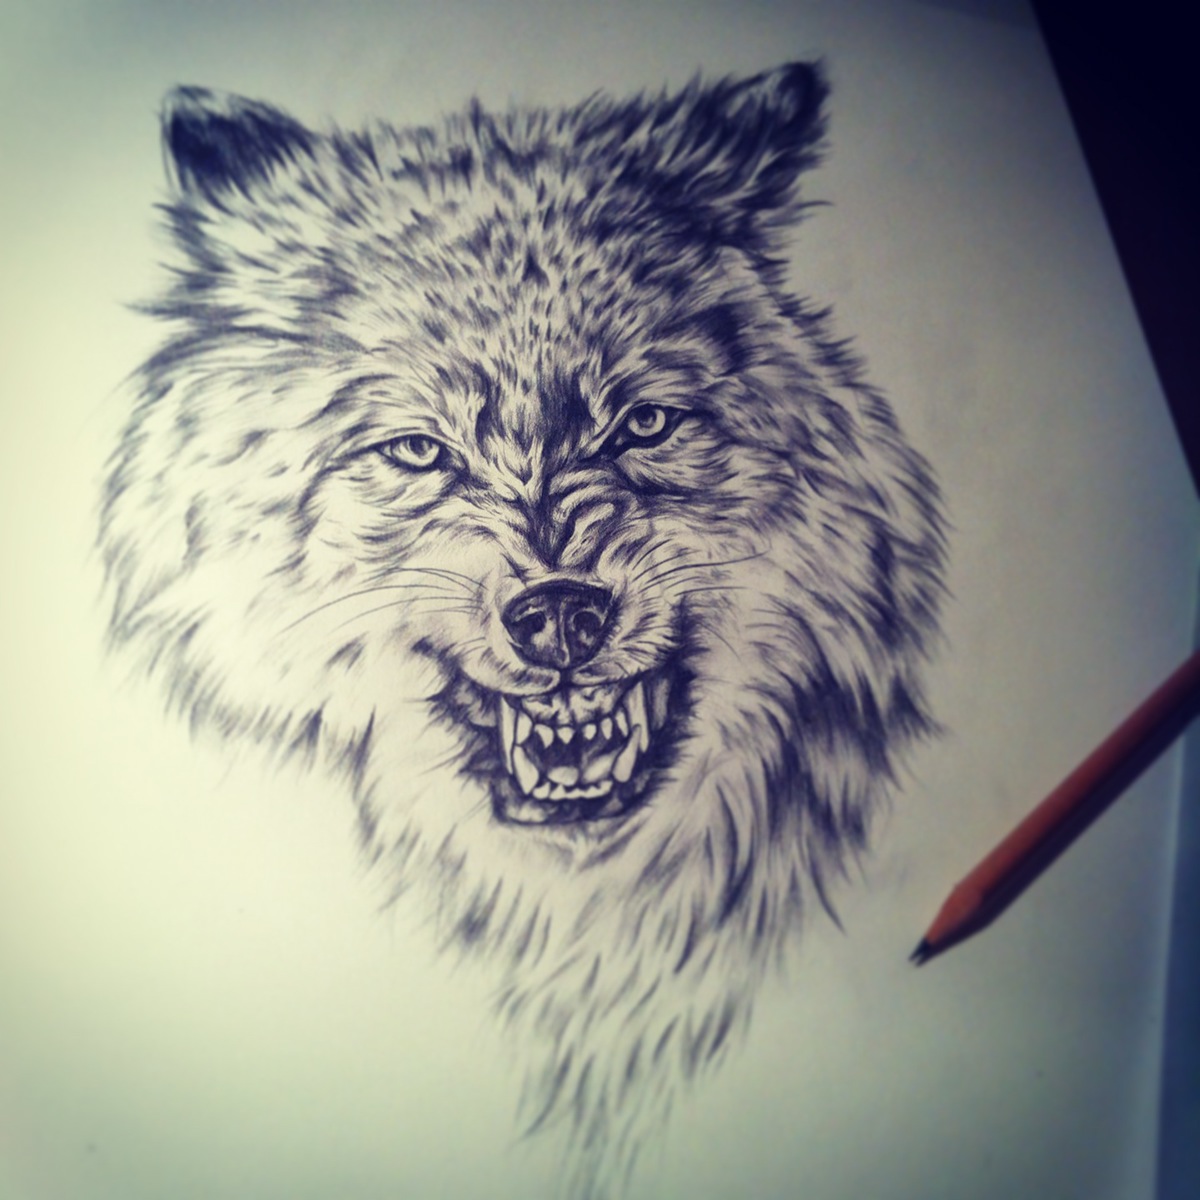 wolf pencil sketch for sale Original wolves animals Realism trees merch design merchandise